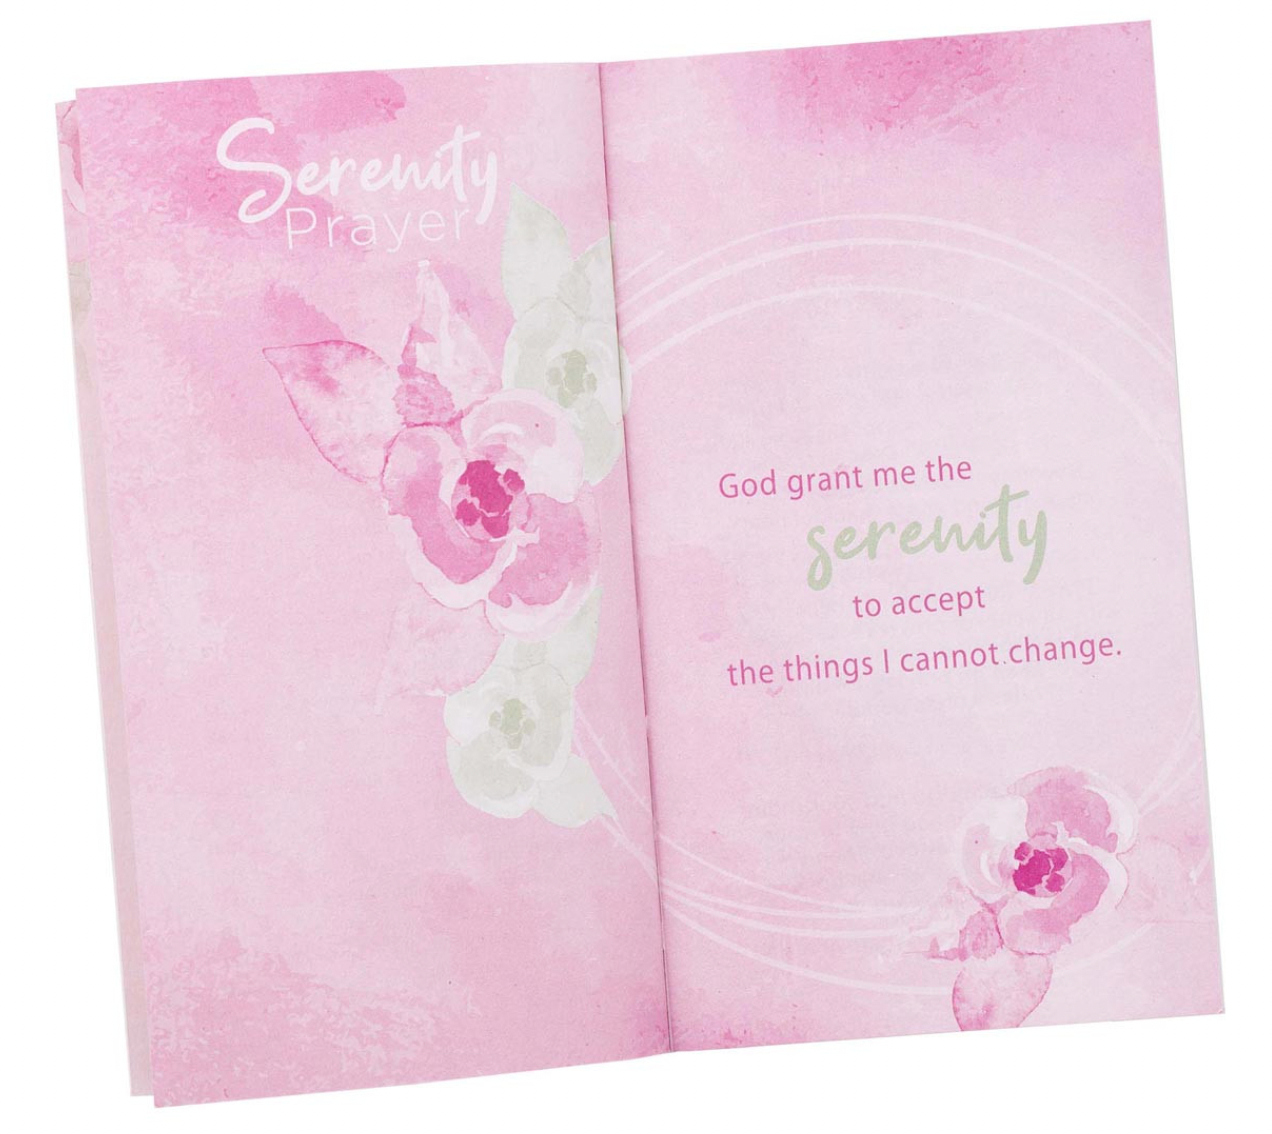 The Serenity Prayer Promise Book